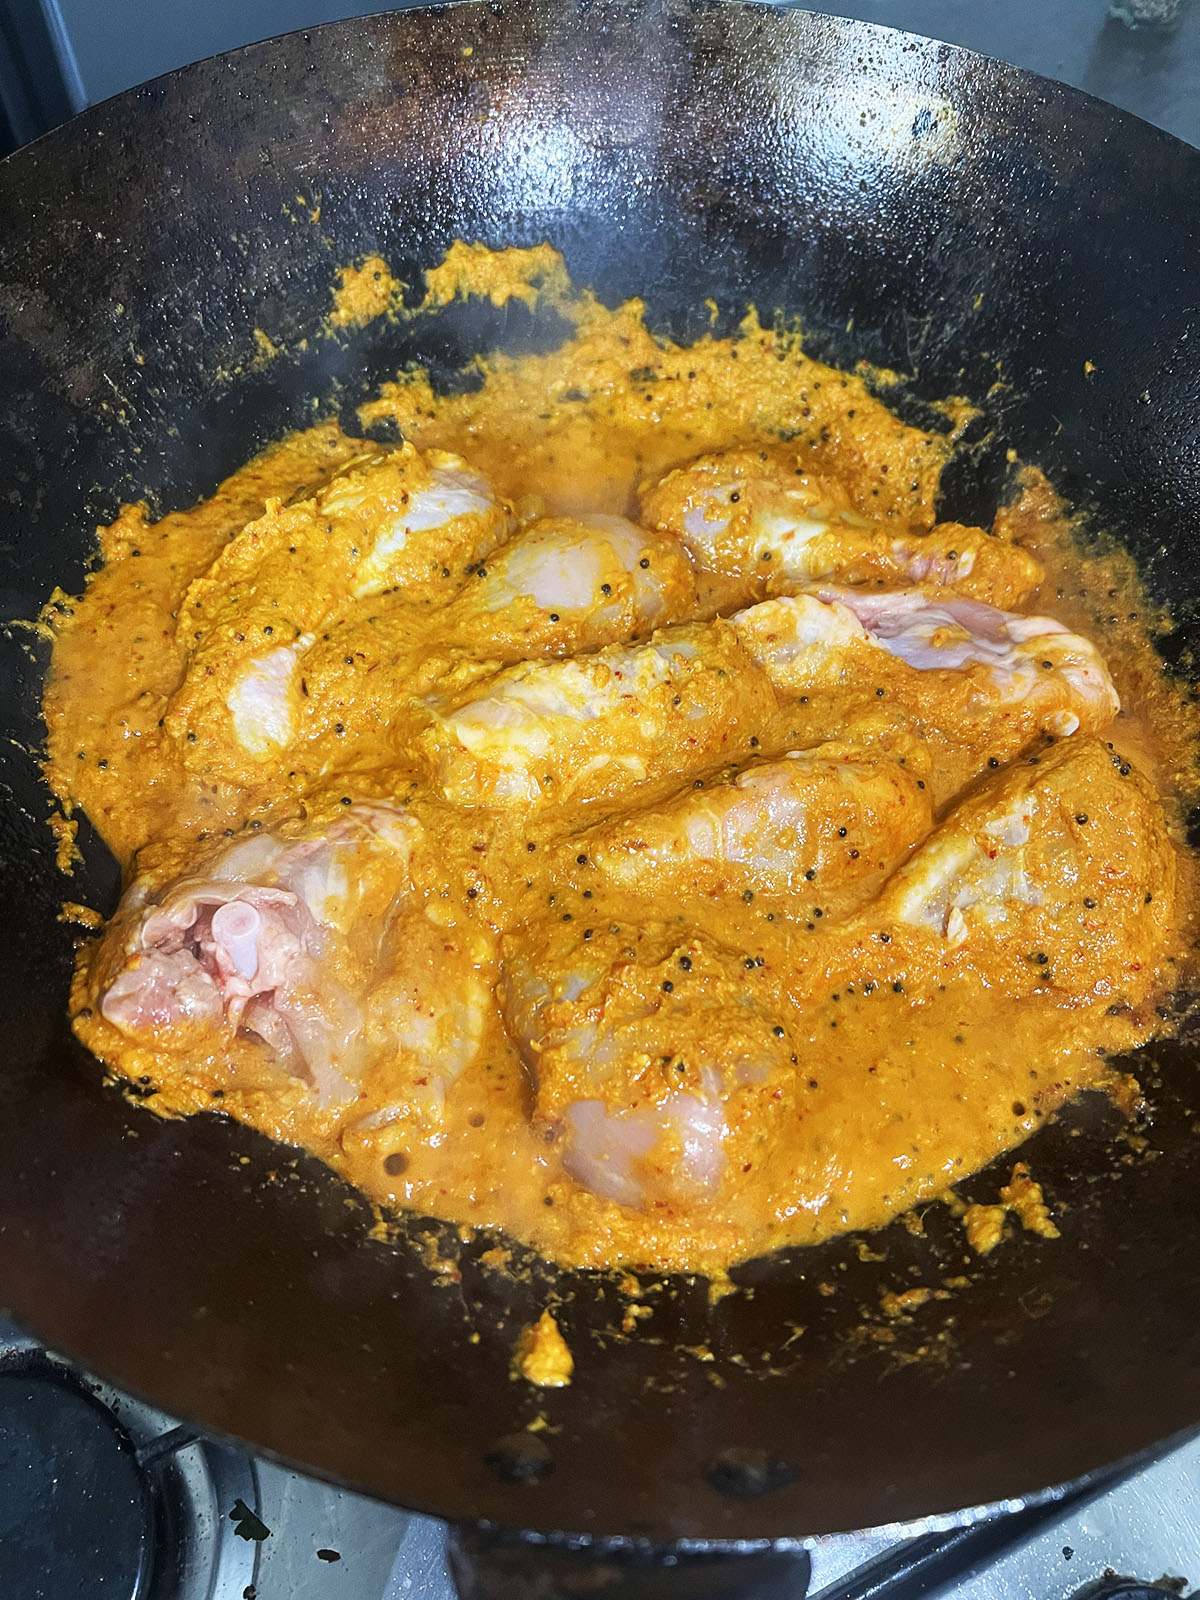 Adding marinated chicken to the sauce